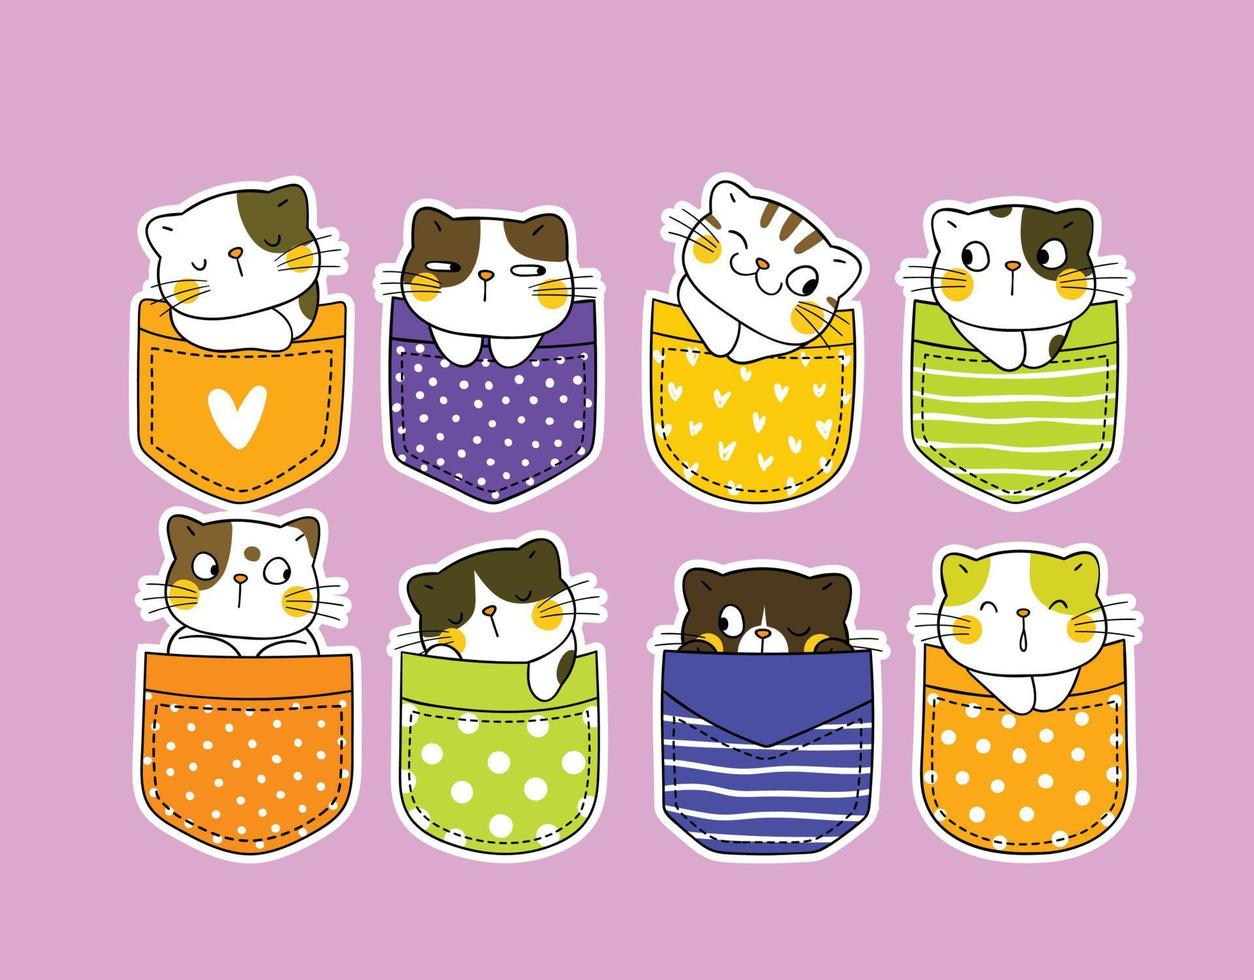 Doodle pocket cats. Kitten in pockets, happy cartoon cute cat vector